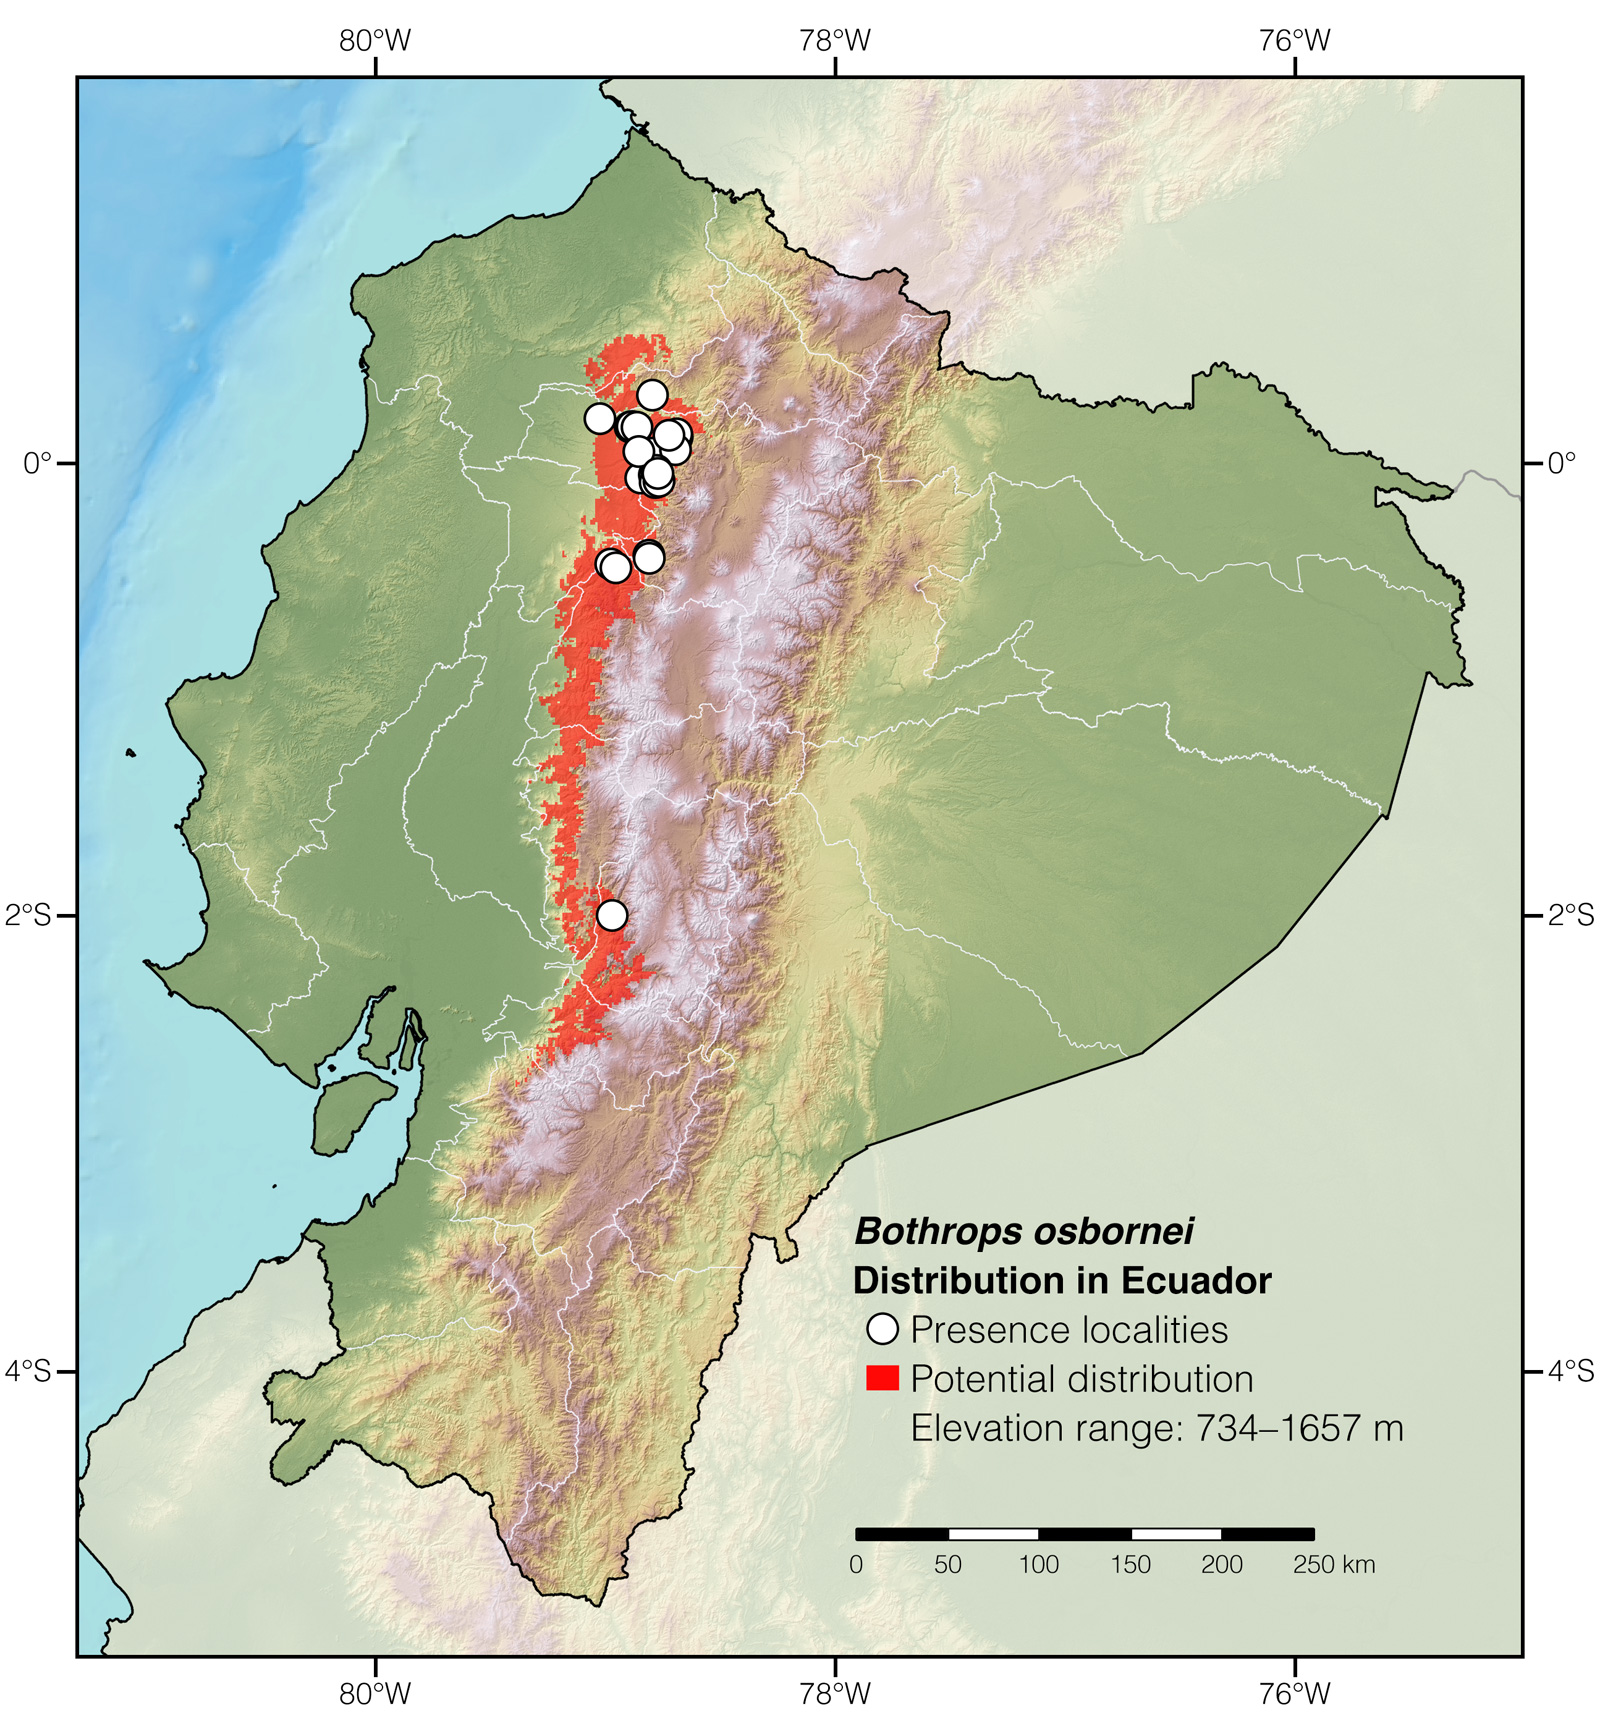 Distribution of Bothrops osbornei in Ecuador